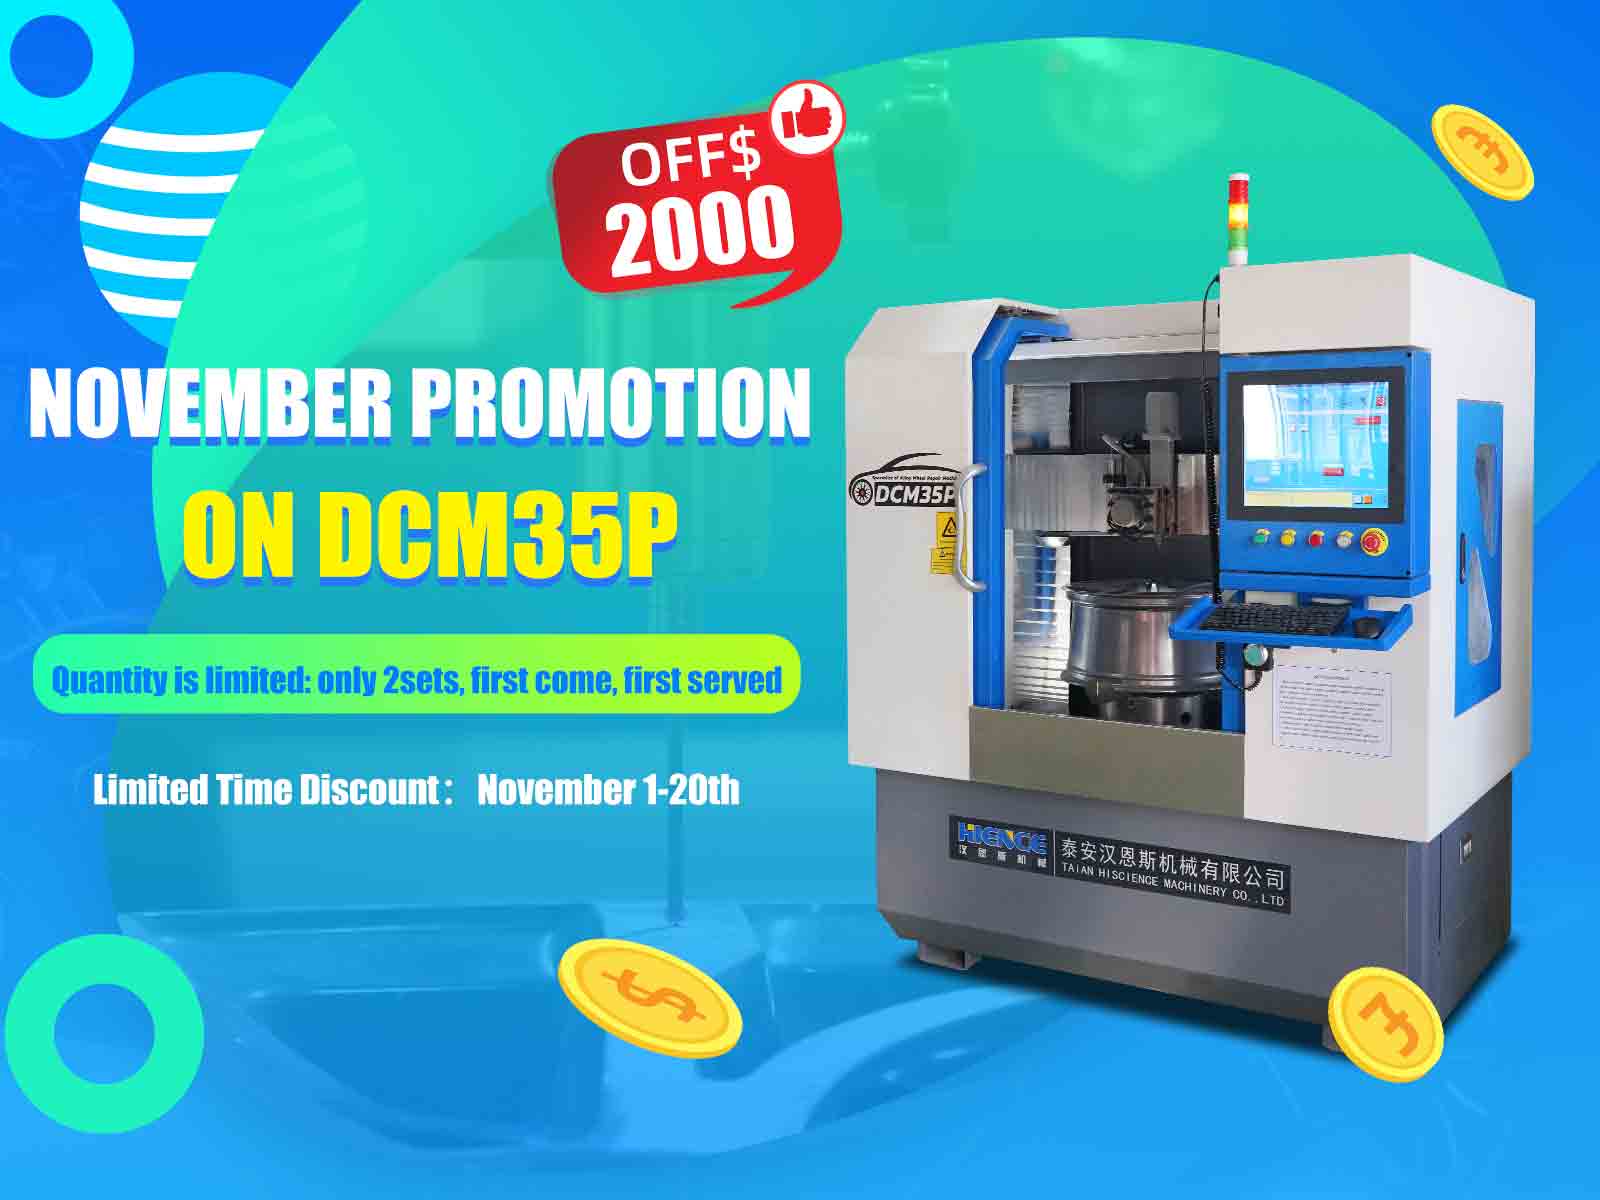 November promotion on wheel repair machine DCM35P